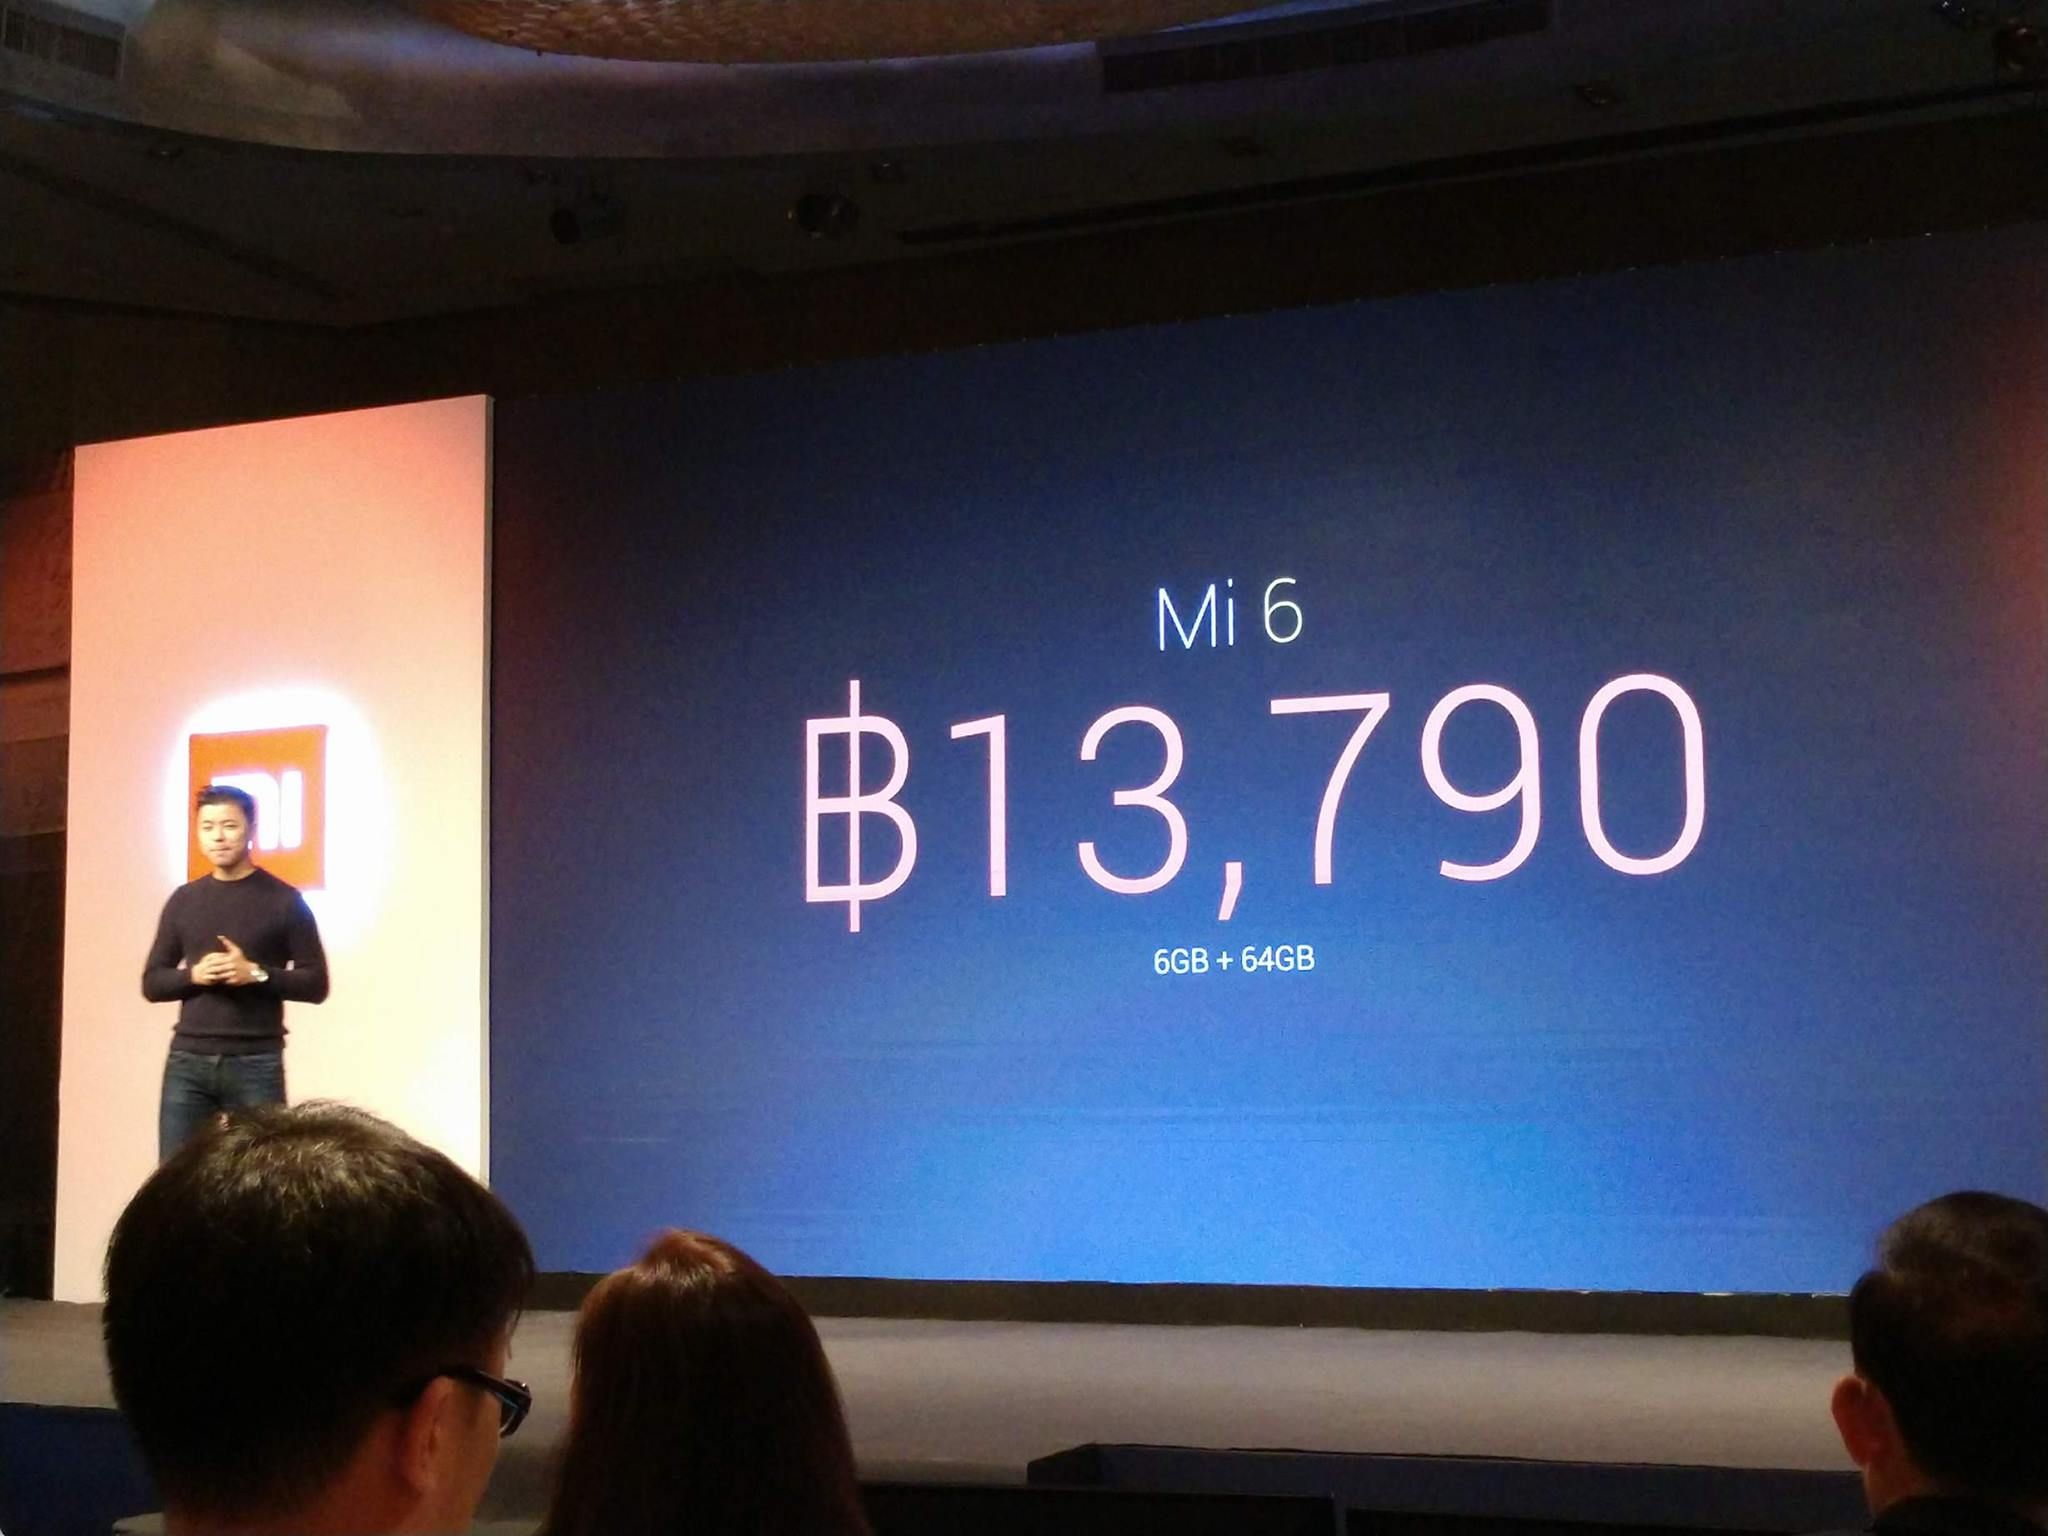 Xiaomi นำเรือธงบุกไทยด้วย Mi 6 ราคาเริ่ม 13,790 บาท, Redmi Note 4 ราคา 6,790 บาท, พร้อมขายผลิตภัณฑ์อื่นๆ ด้วย